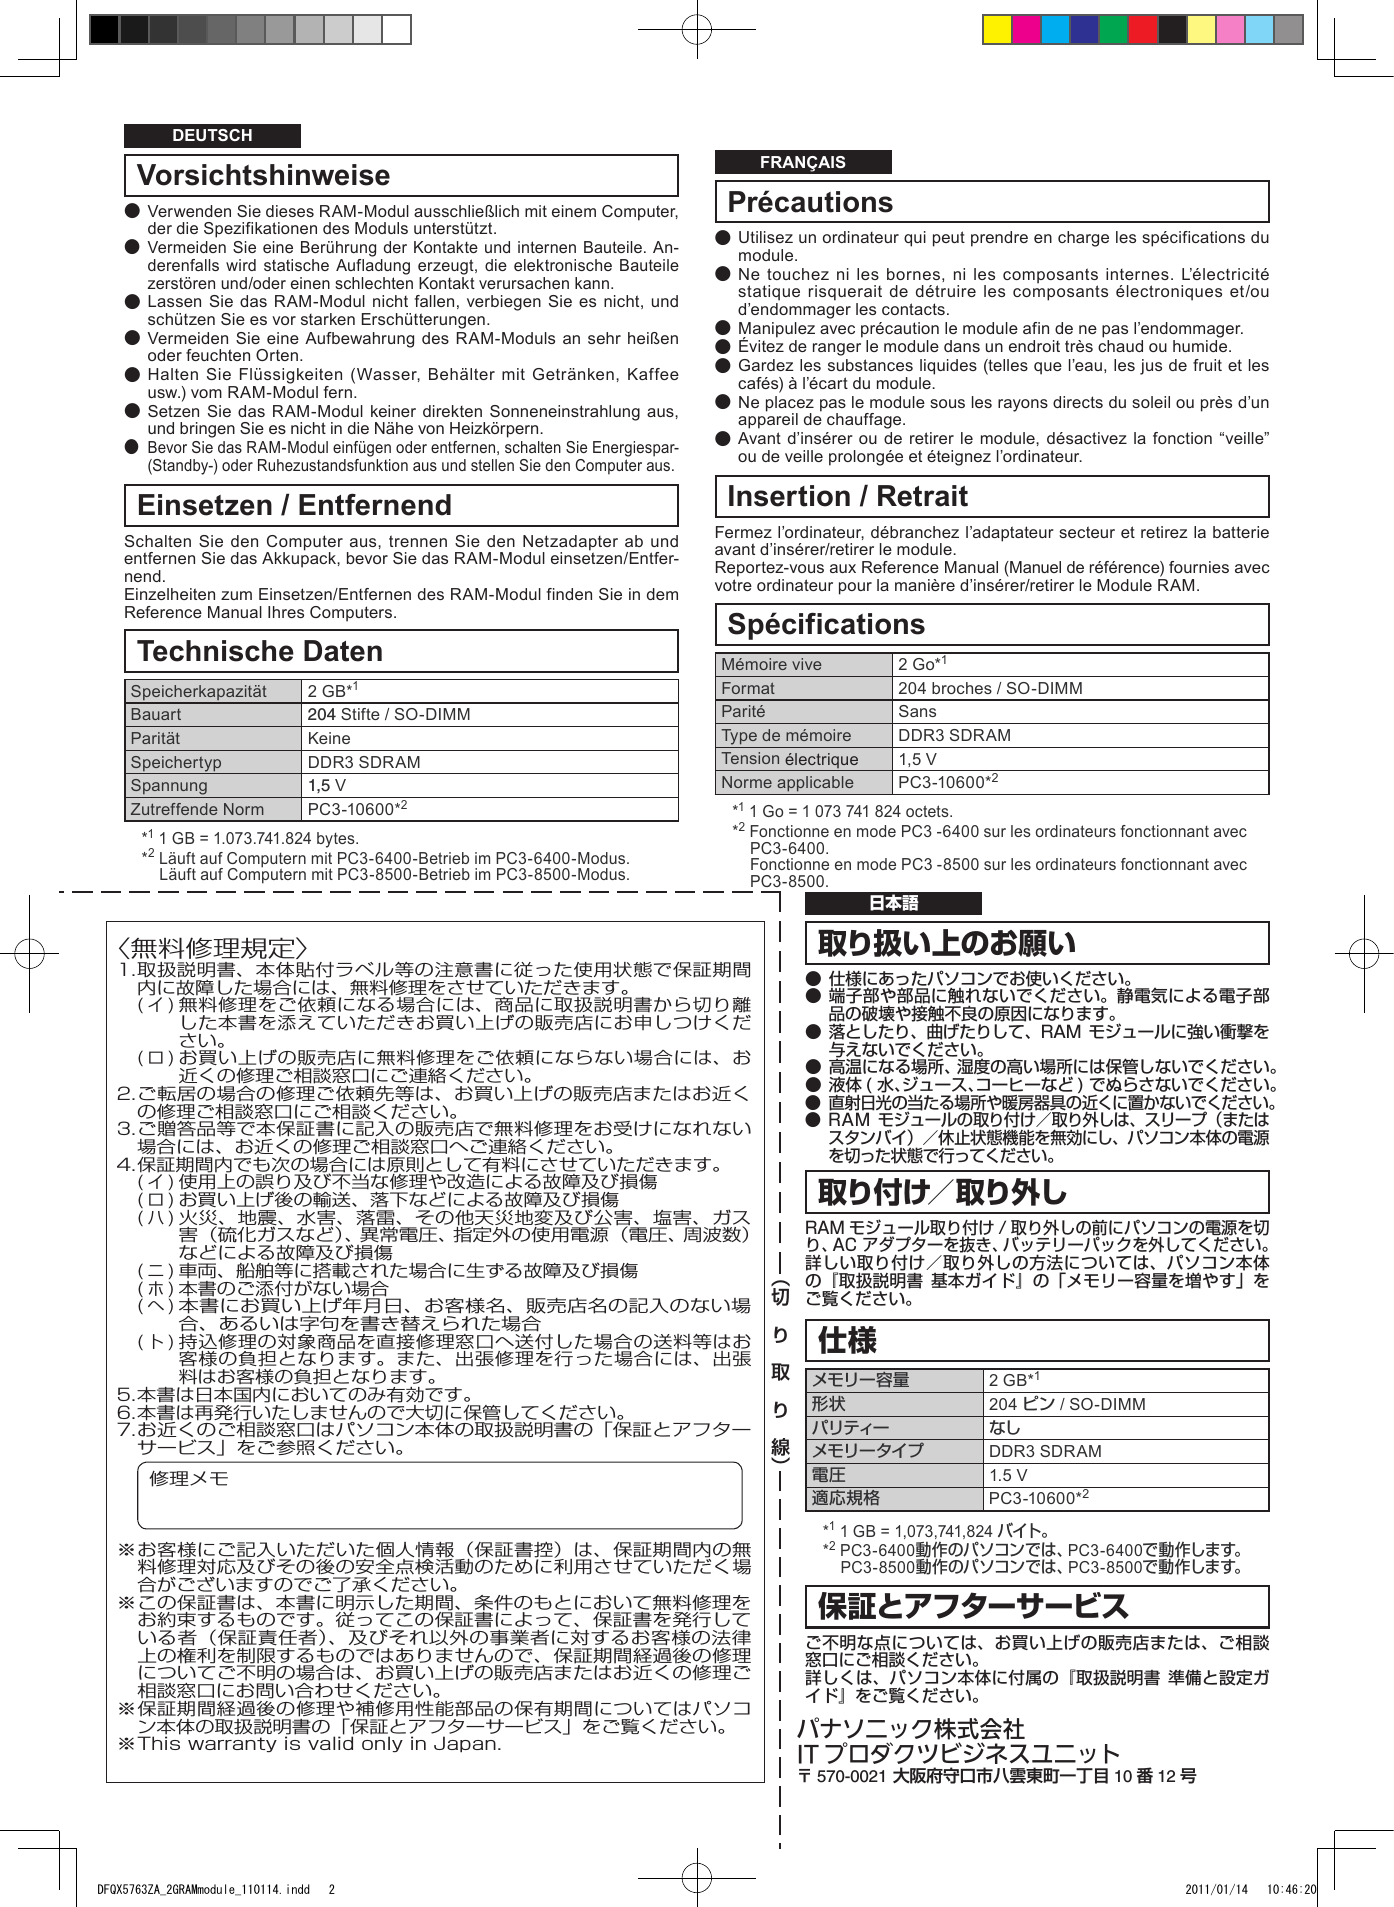 Page 2 of 2 - Panasonic CF-BAxxxxx (RAM Module) DFQX5763ZA_2GRAMmodule_110114 User Manual : Operating Instructions (English/ German/ French/ Japanese) Bad02gu-oi-dfqx5763za-non-nonlogo-JMGF-p20110032